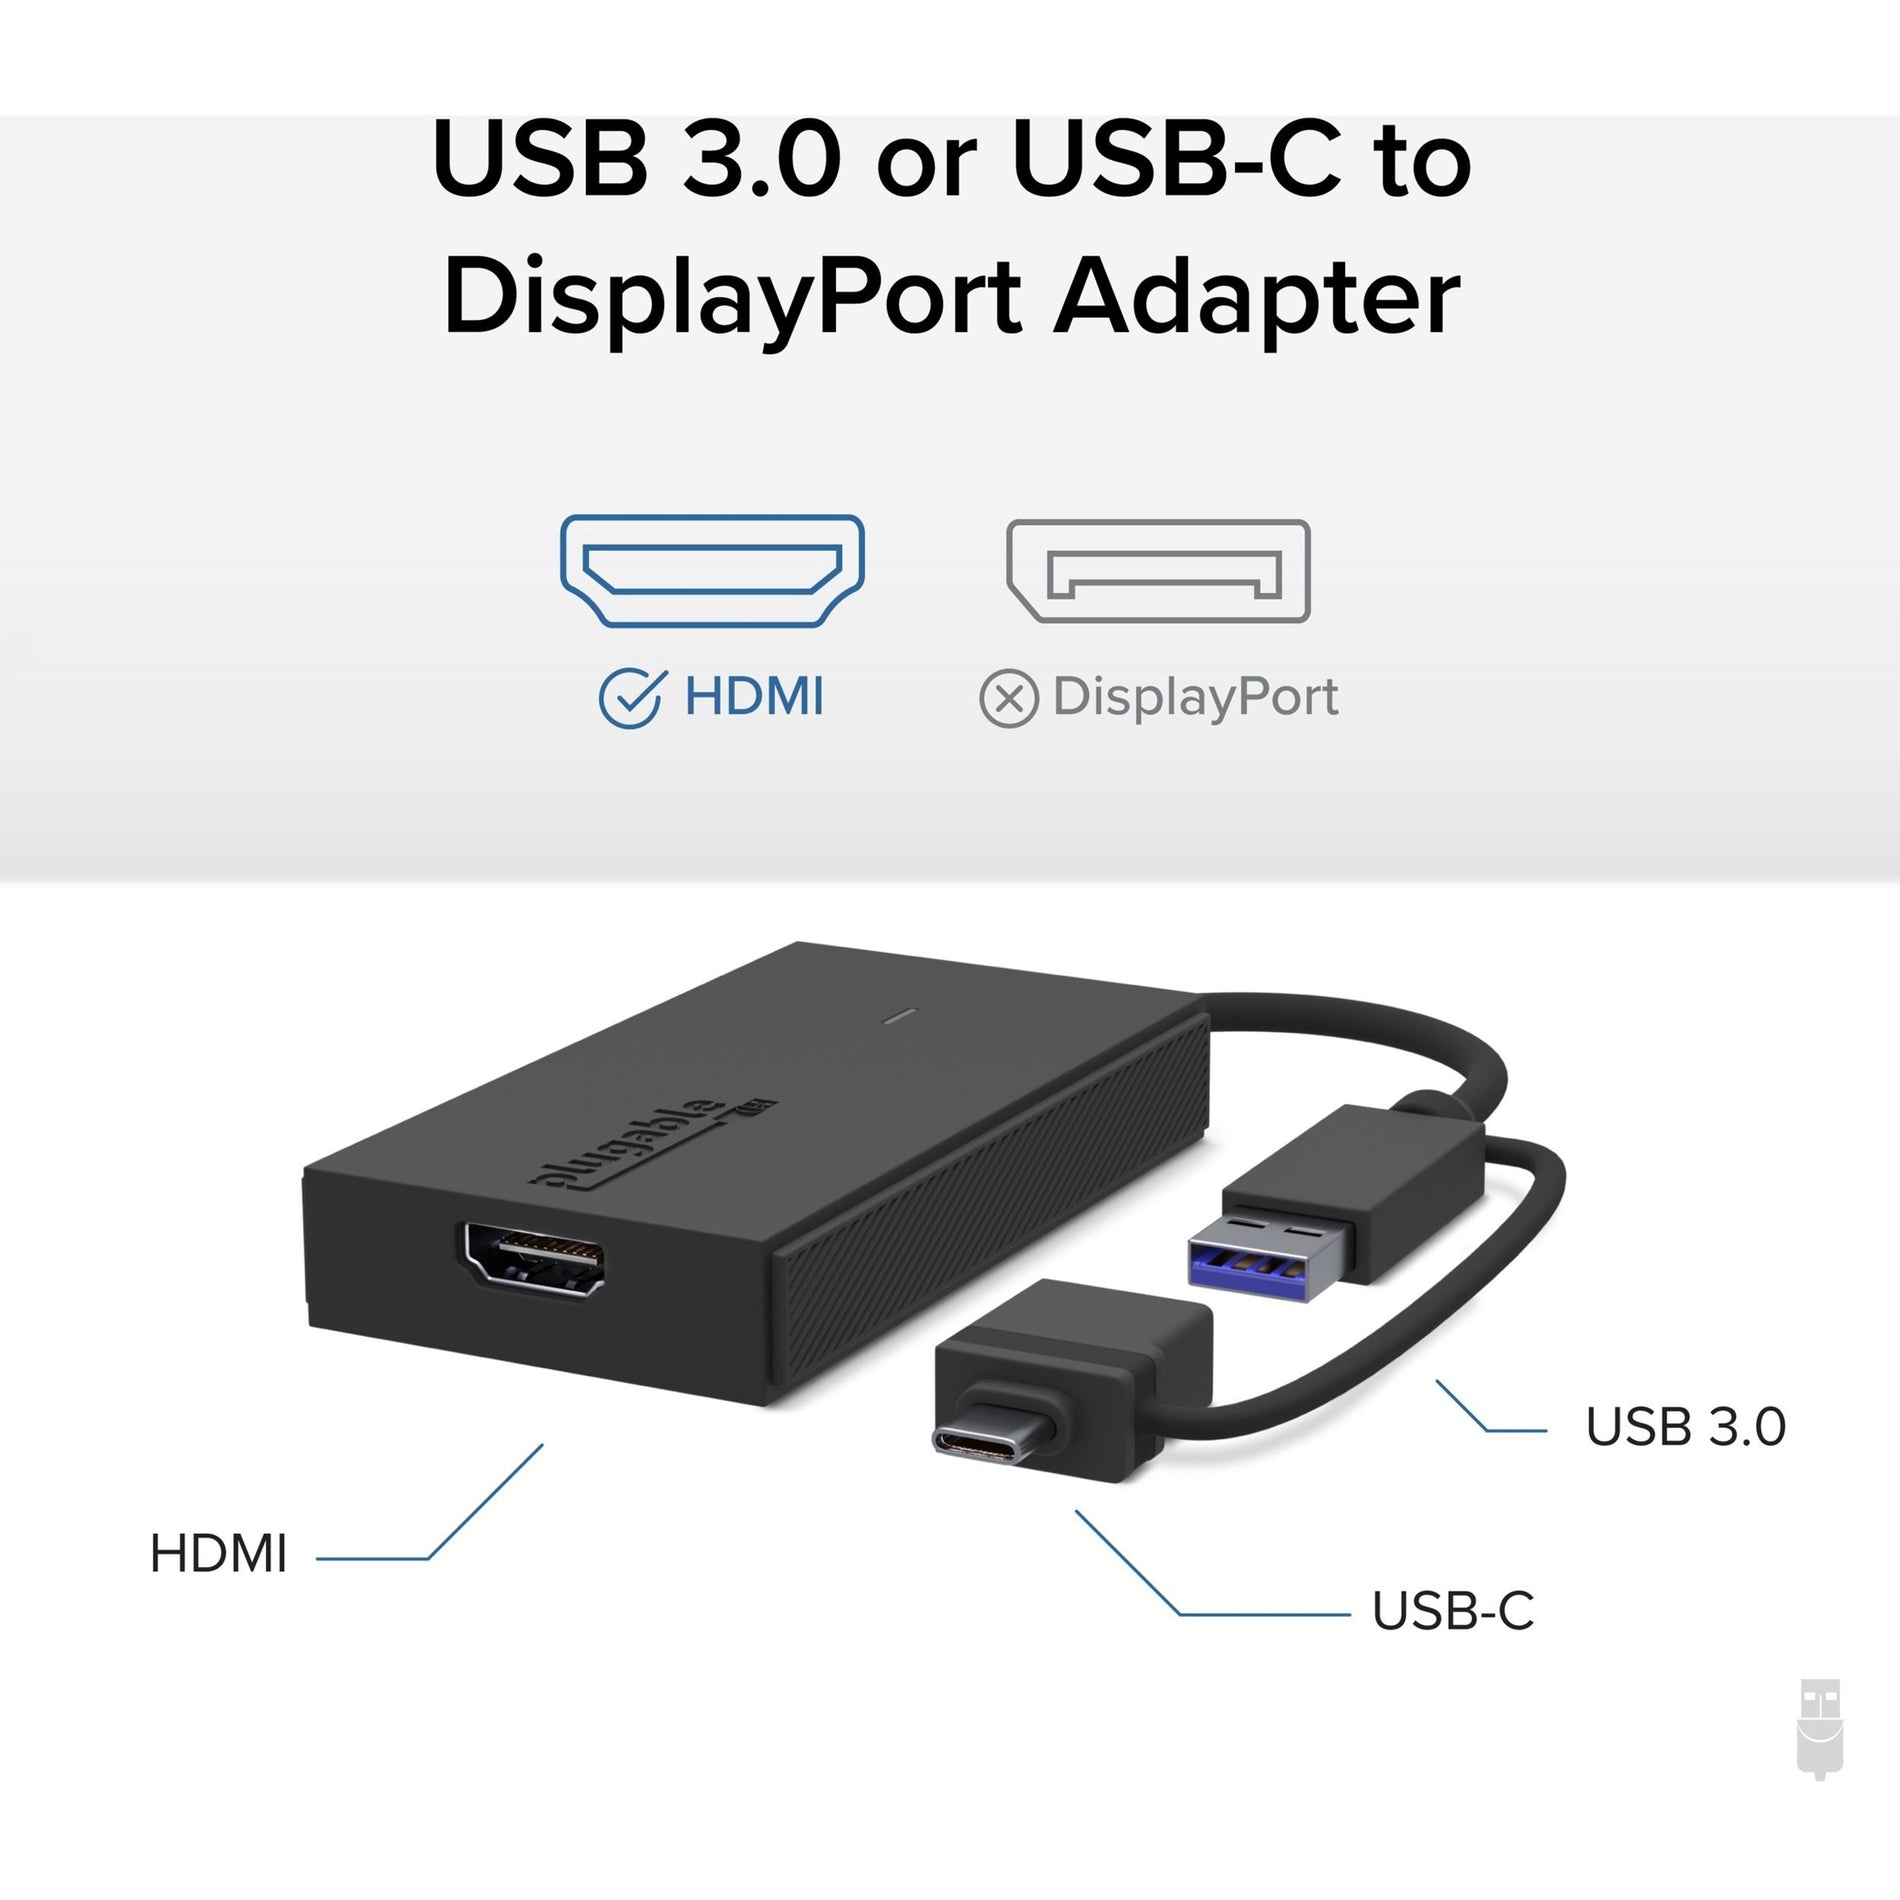 Plugable UGA-HDMI-S HDMI/USB/USB-C Audio/Video Adapter, HDCP, Charging